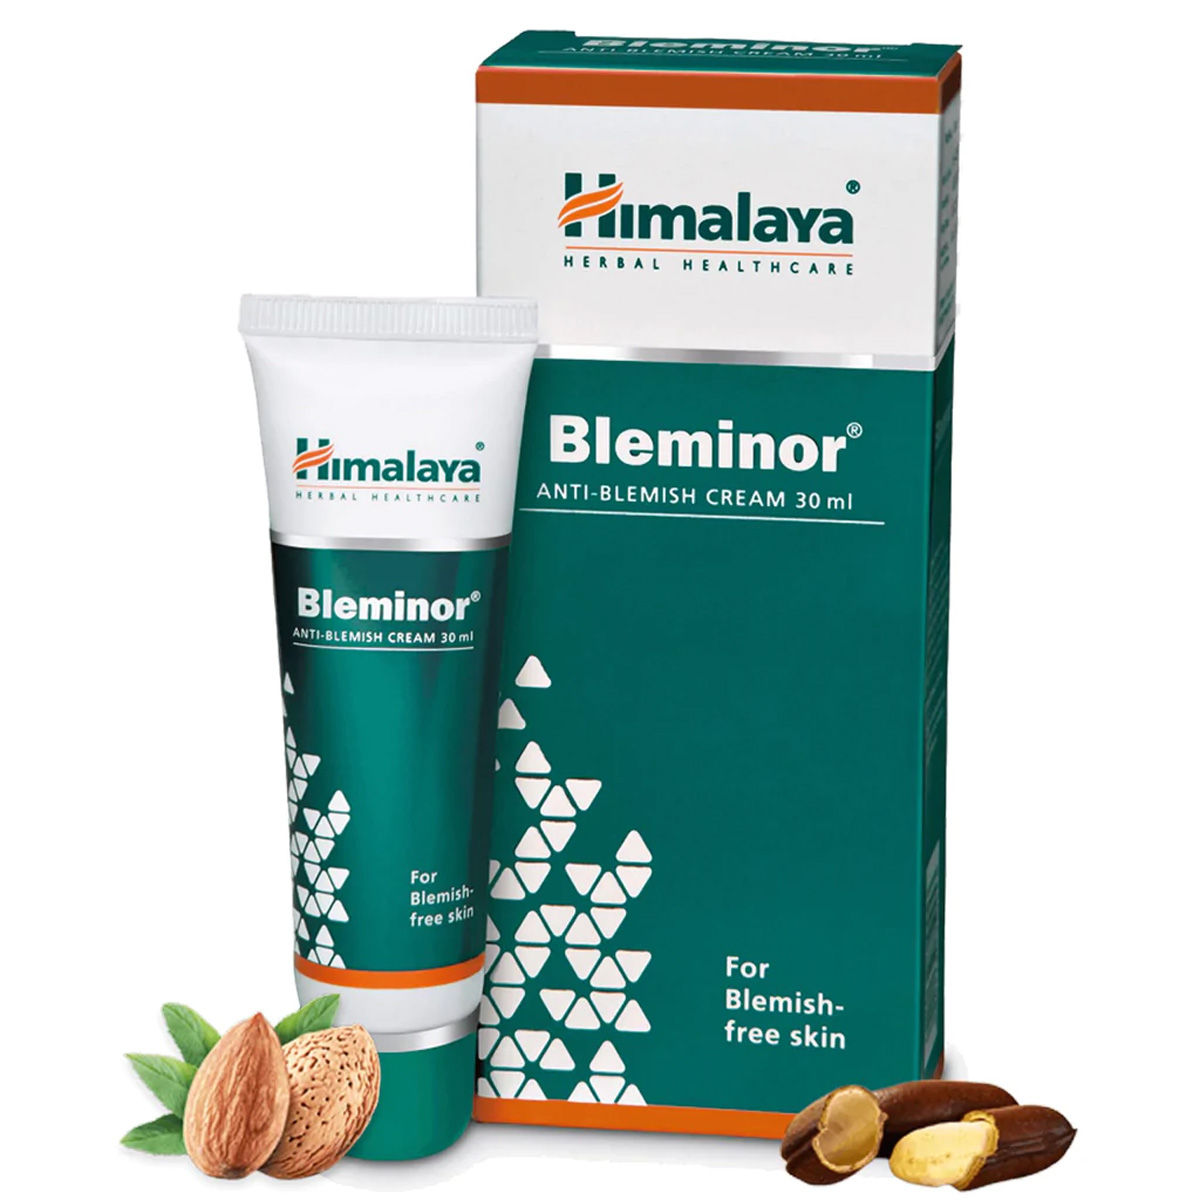 Himalaya Anti Hair Loss Cream, 50 ml Price, Uses, Side Effects, Composition  - Apollo Pharmacy